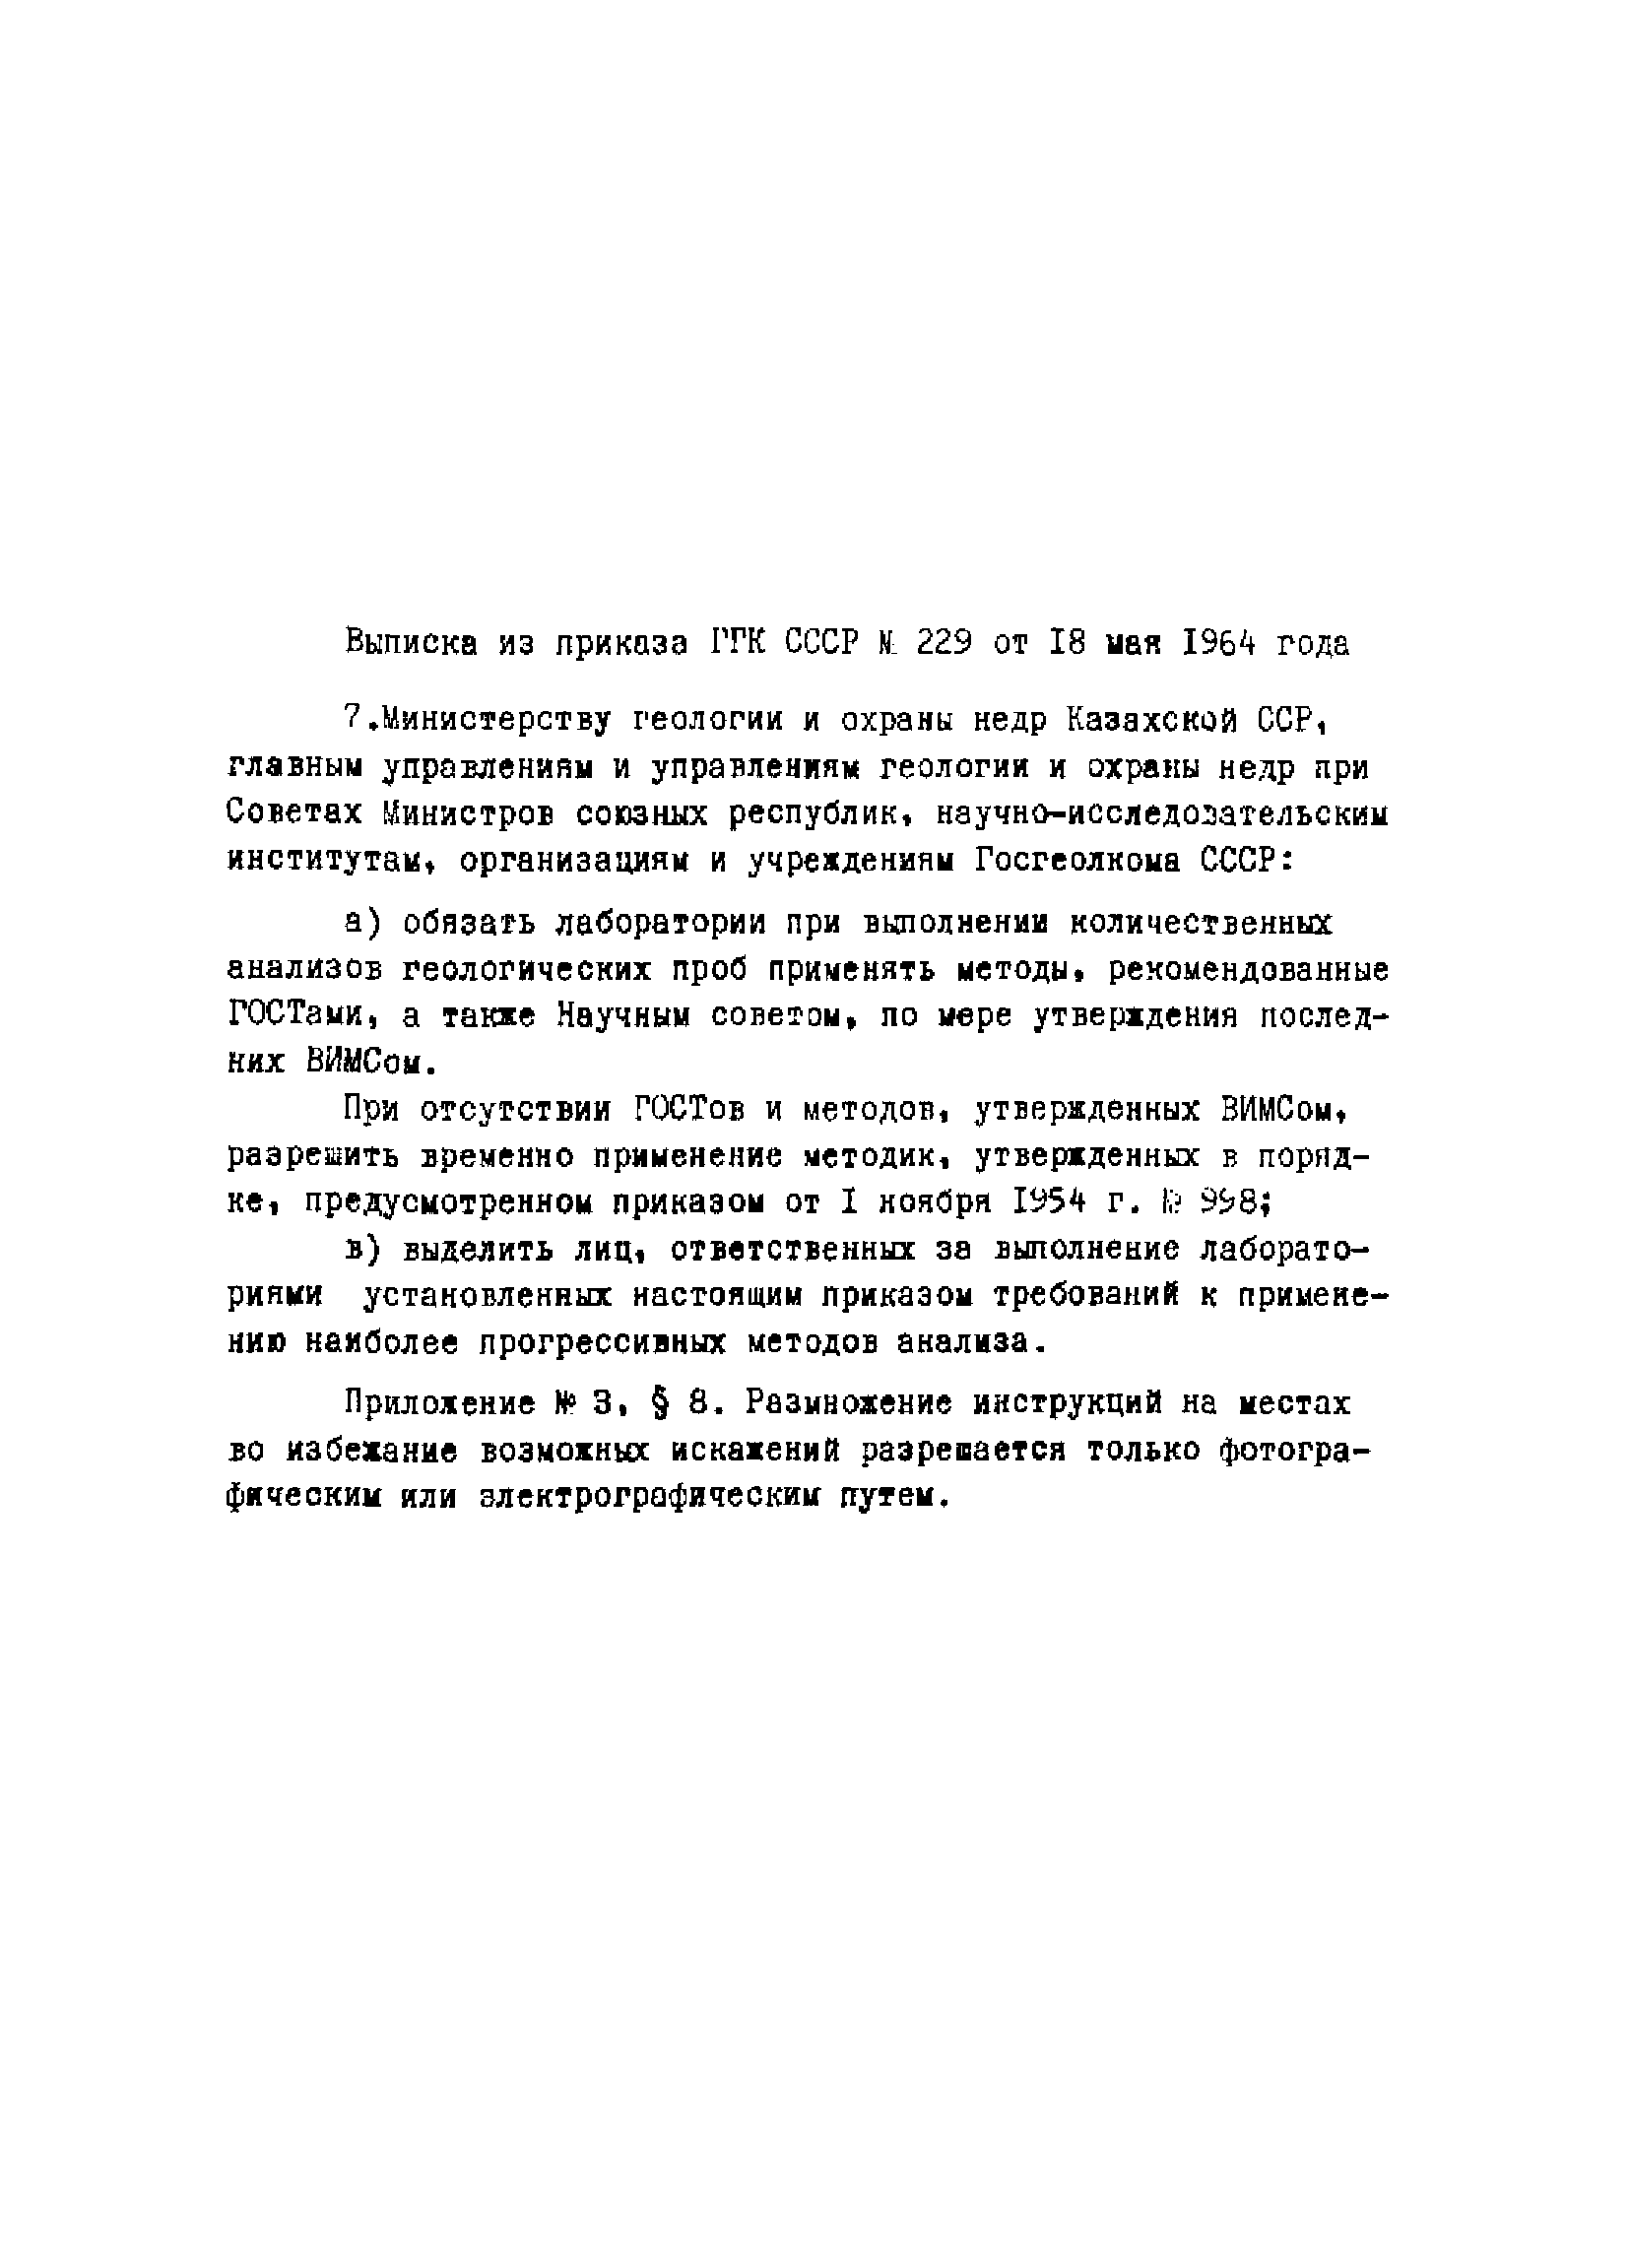 Инструкция НСАМ 54-Х